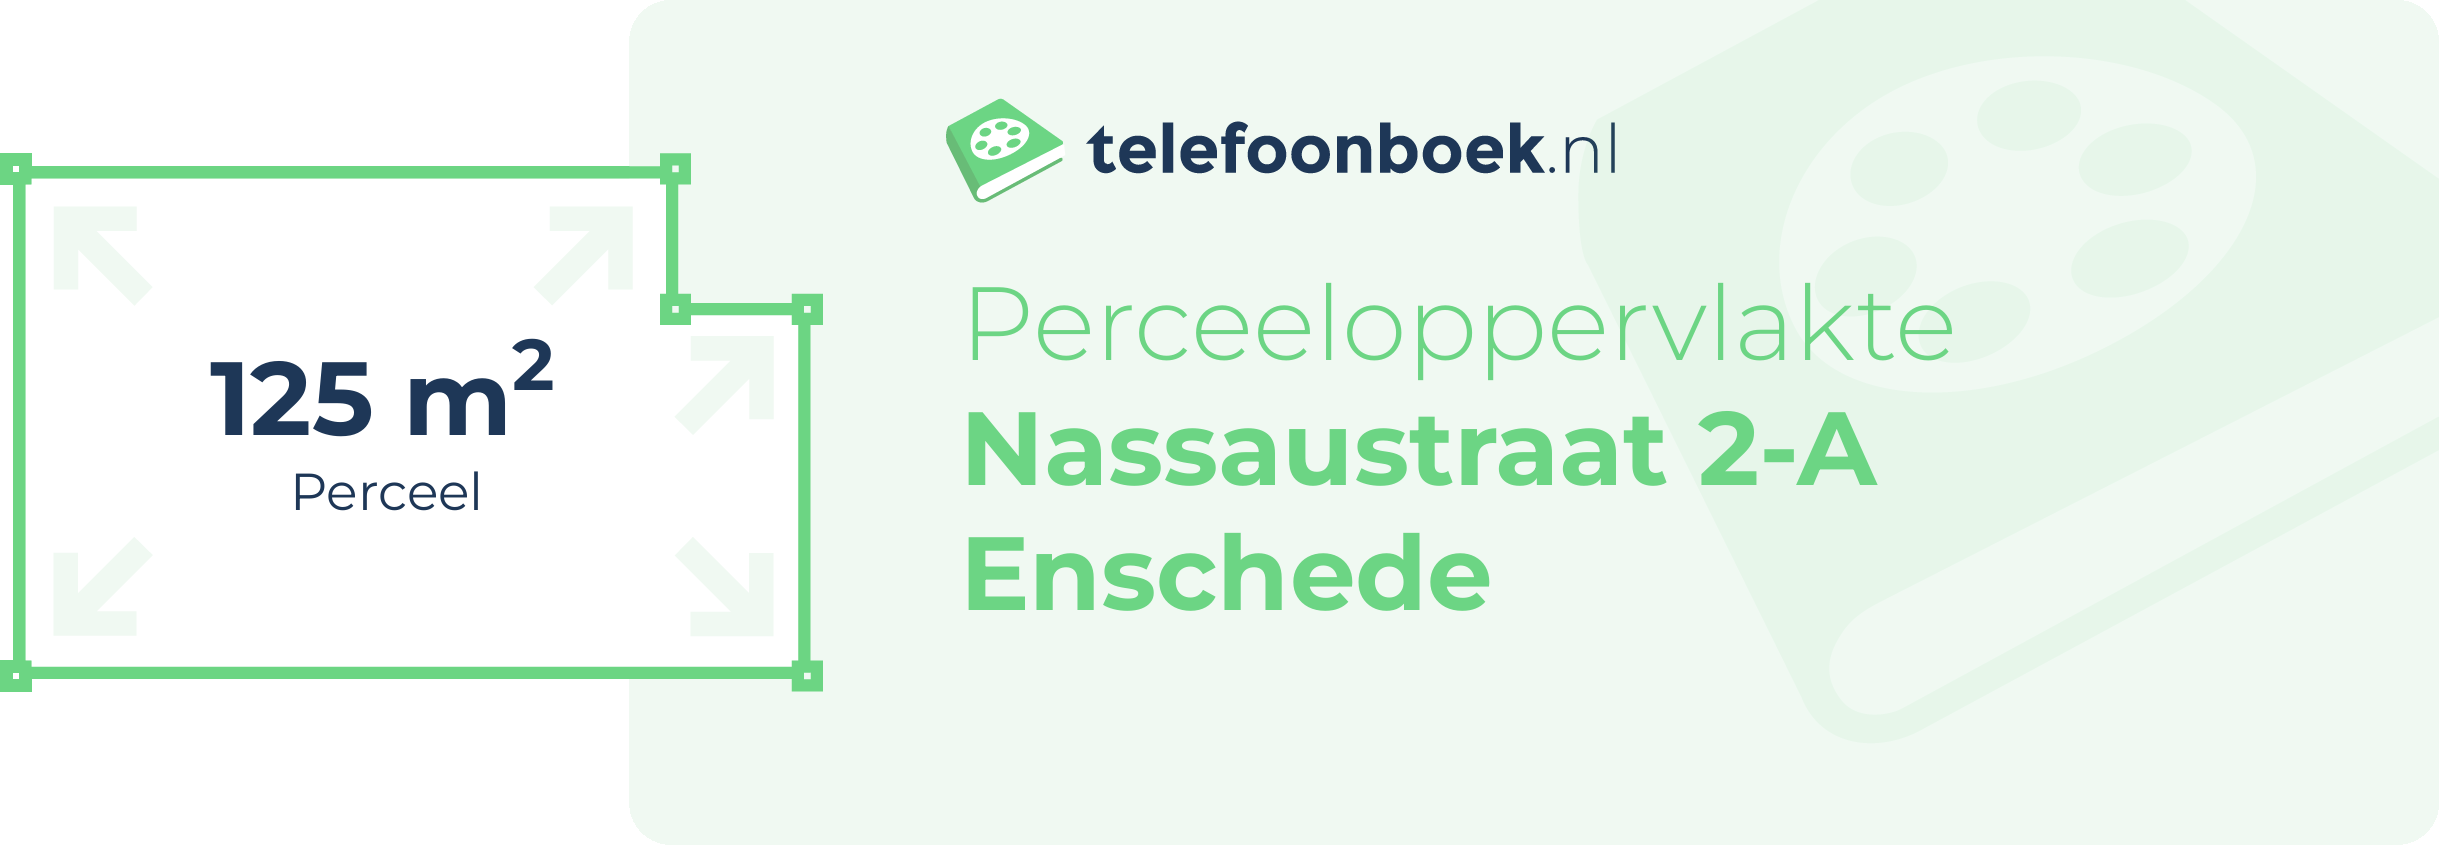 Perceeloppervlakte Nassaustraat 2-A Enschede